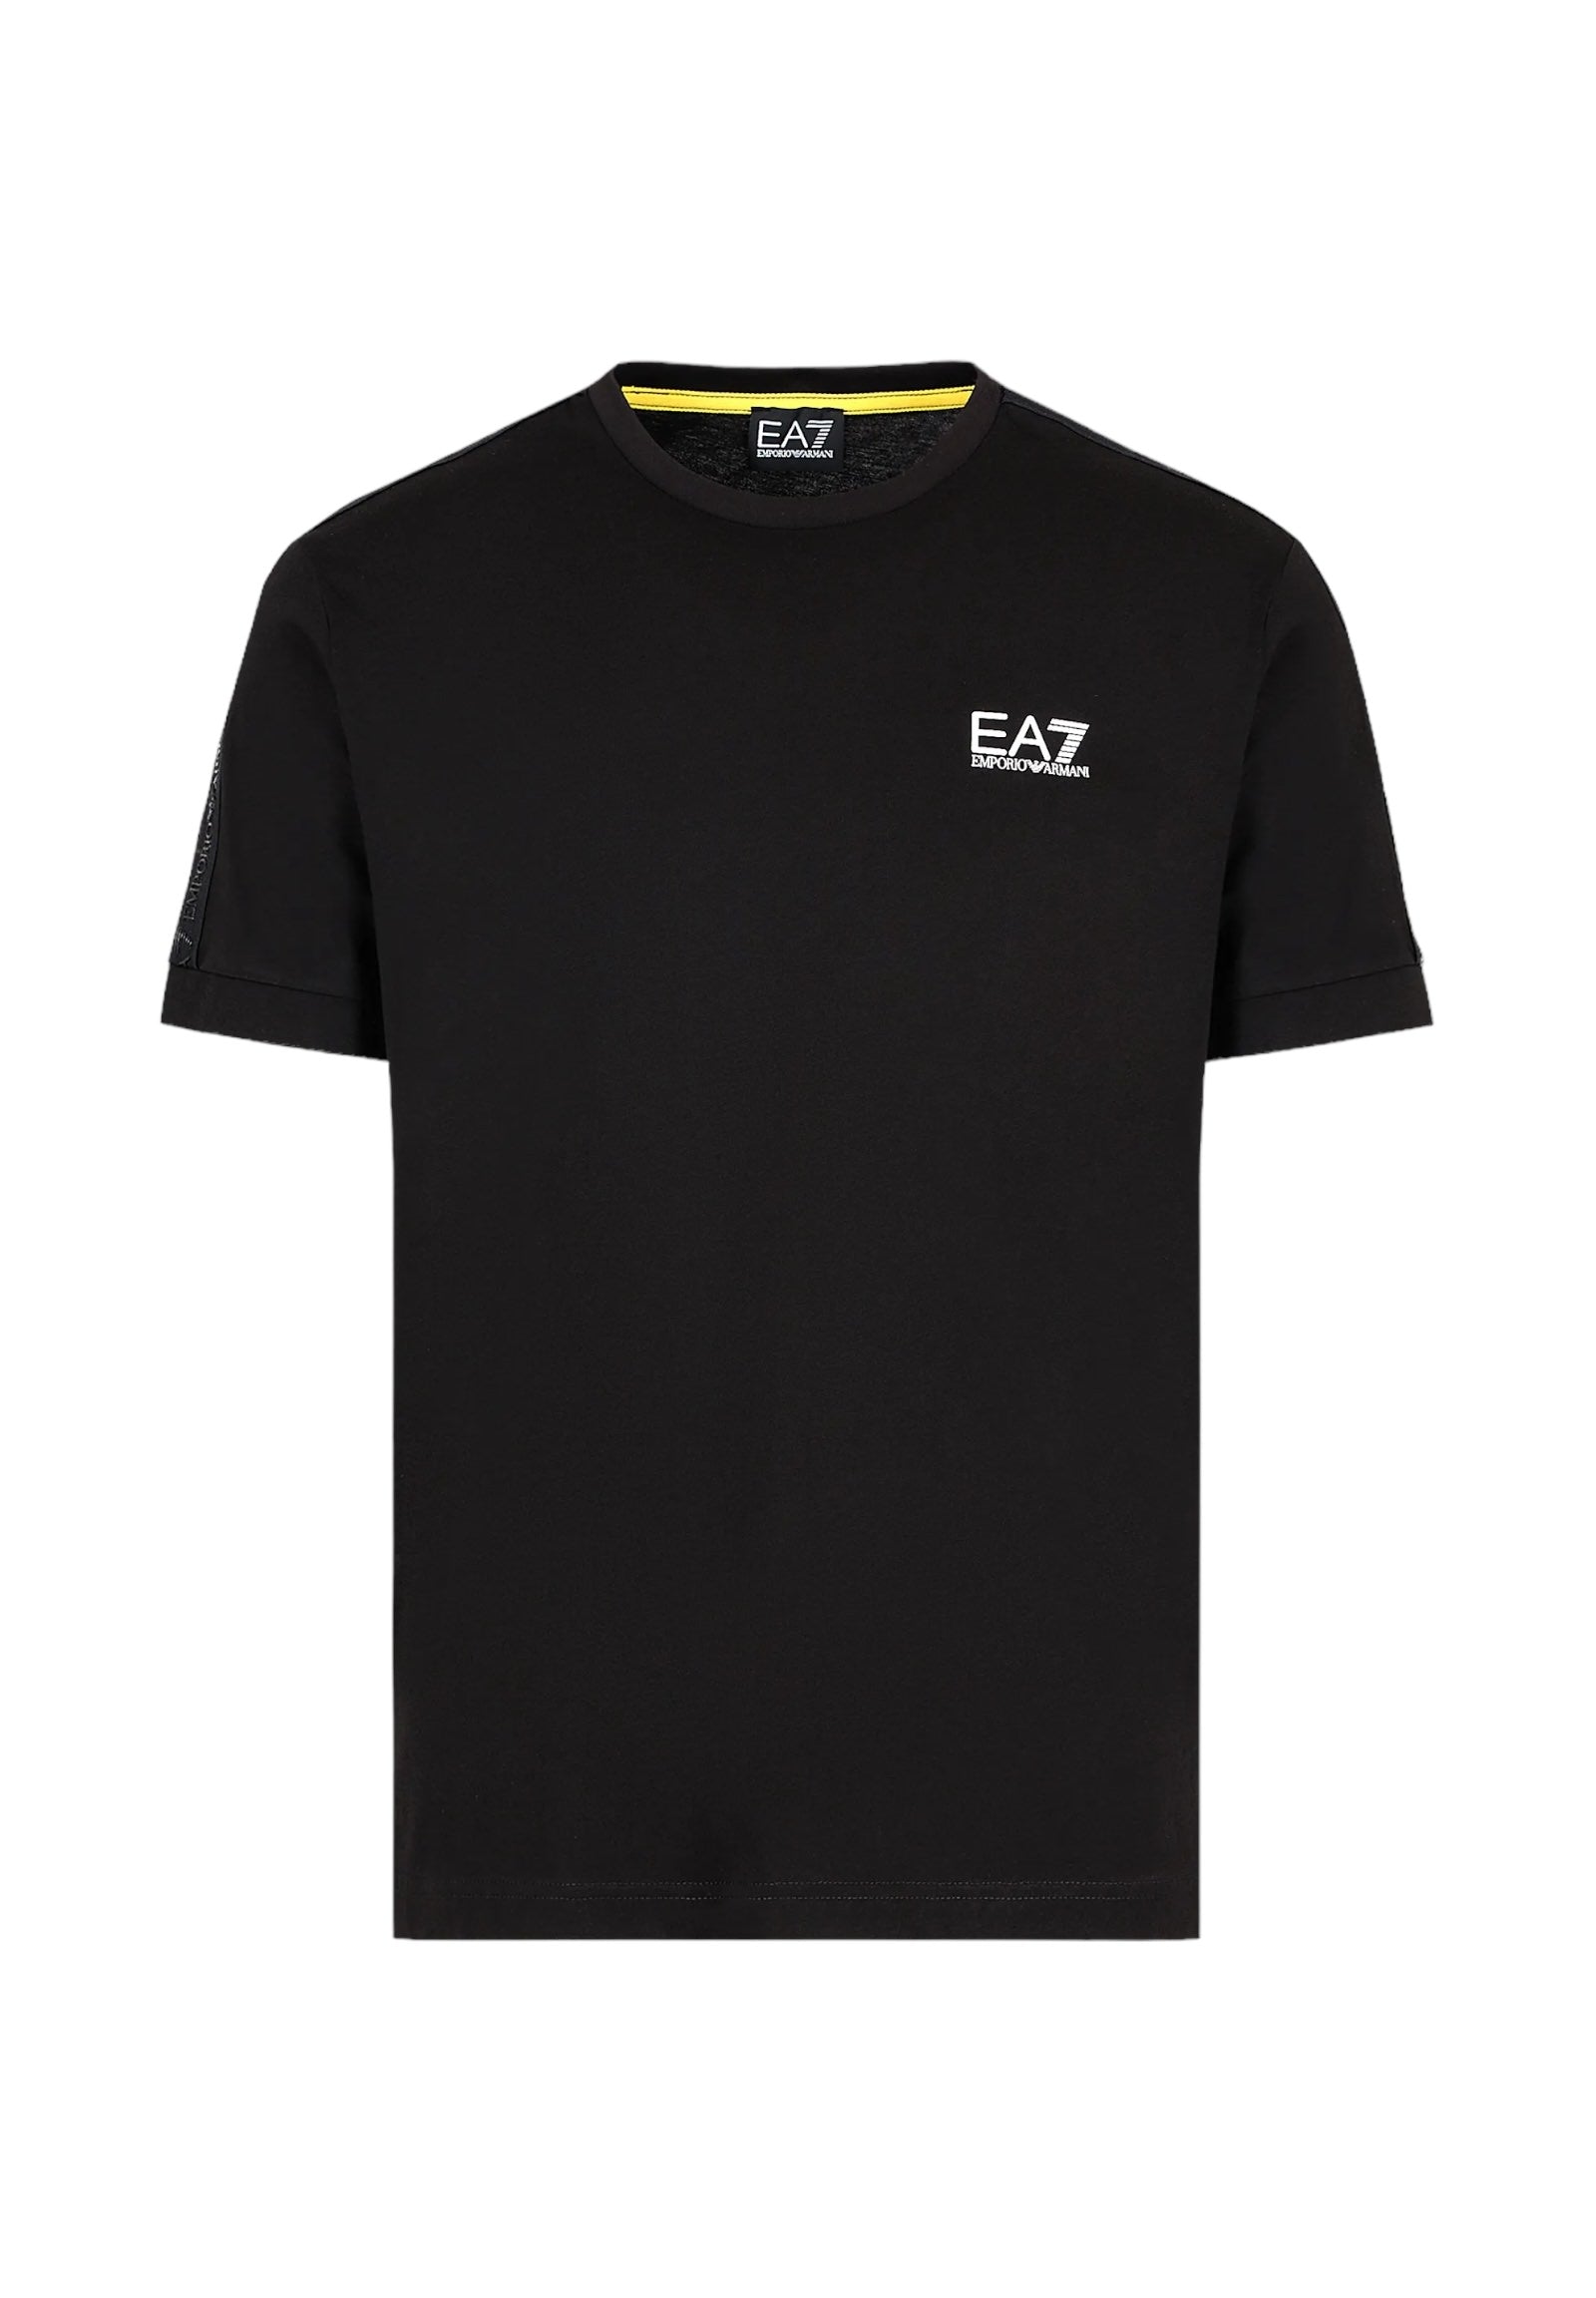 Ea7 Emporio Armani T-Shirt* 3dpt35 Black